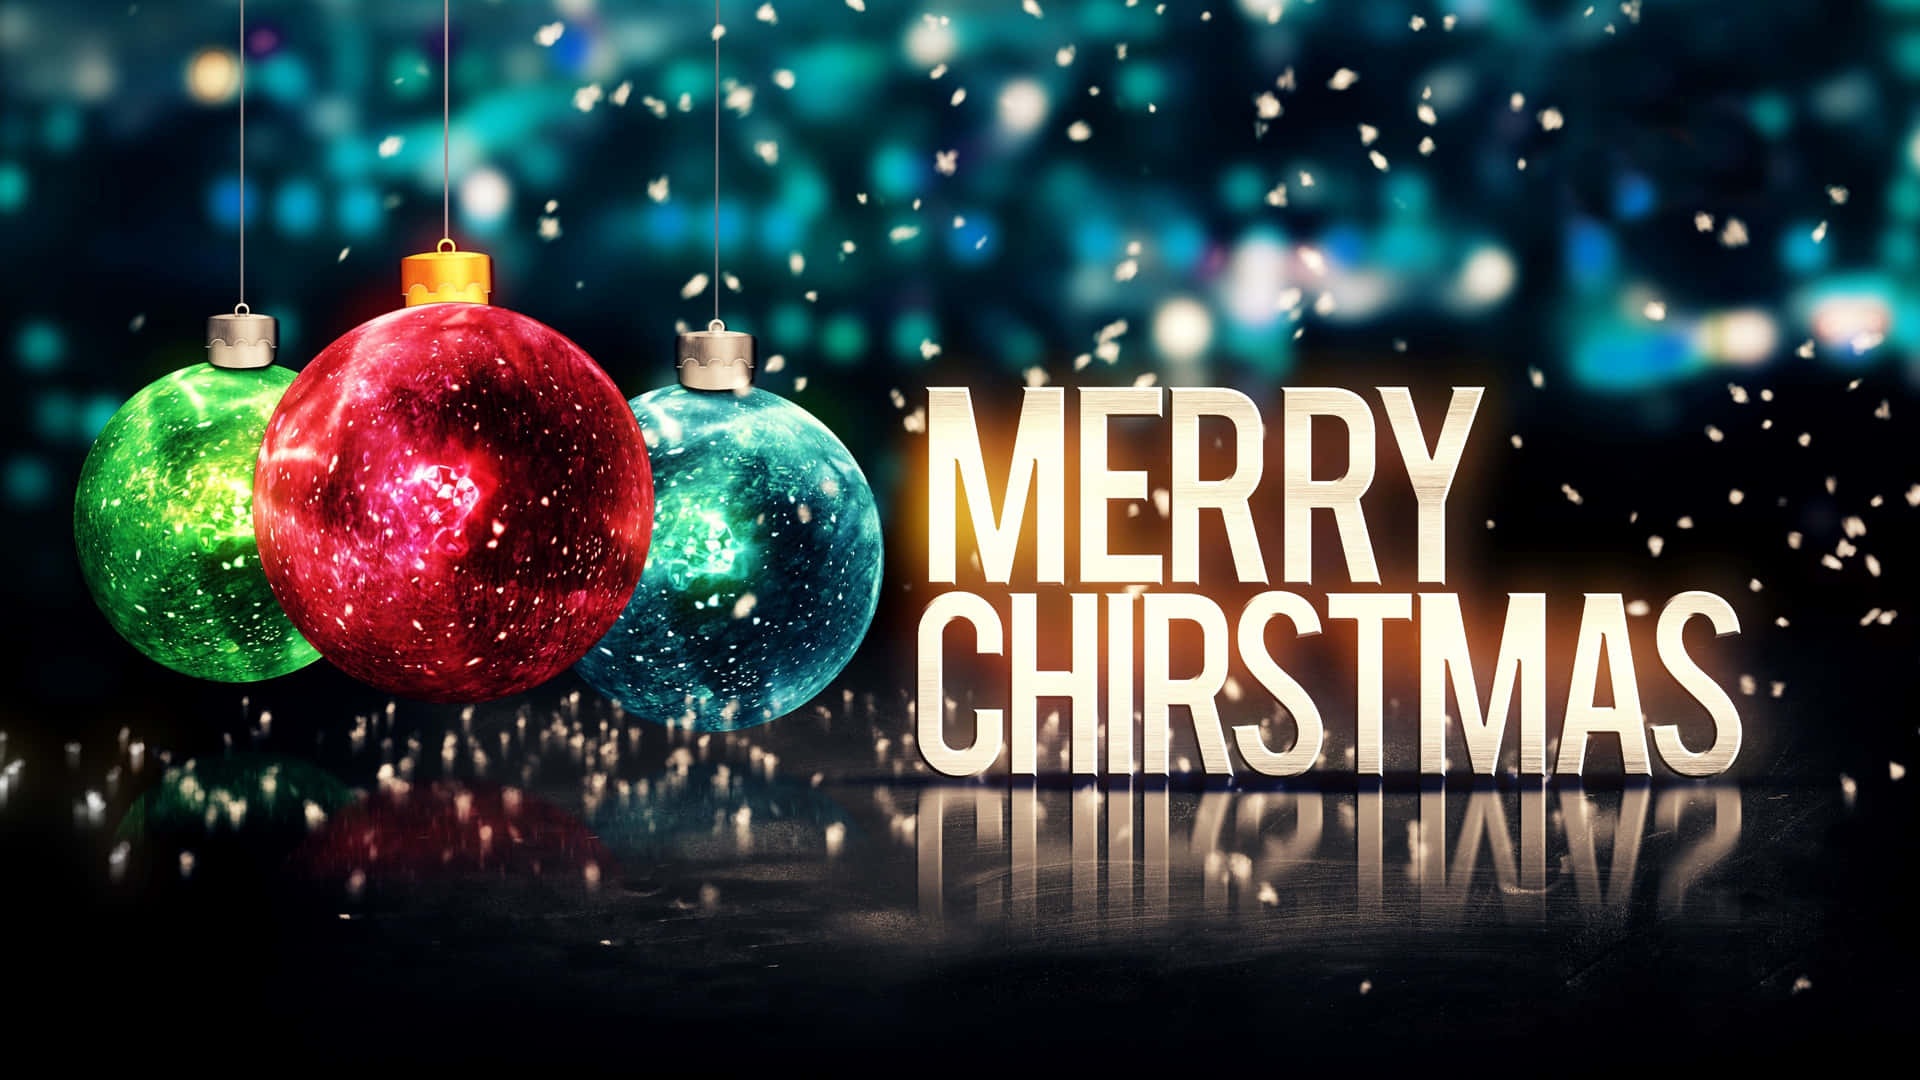 Wishing you a peaceful and joyous Christmas Wallpaper